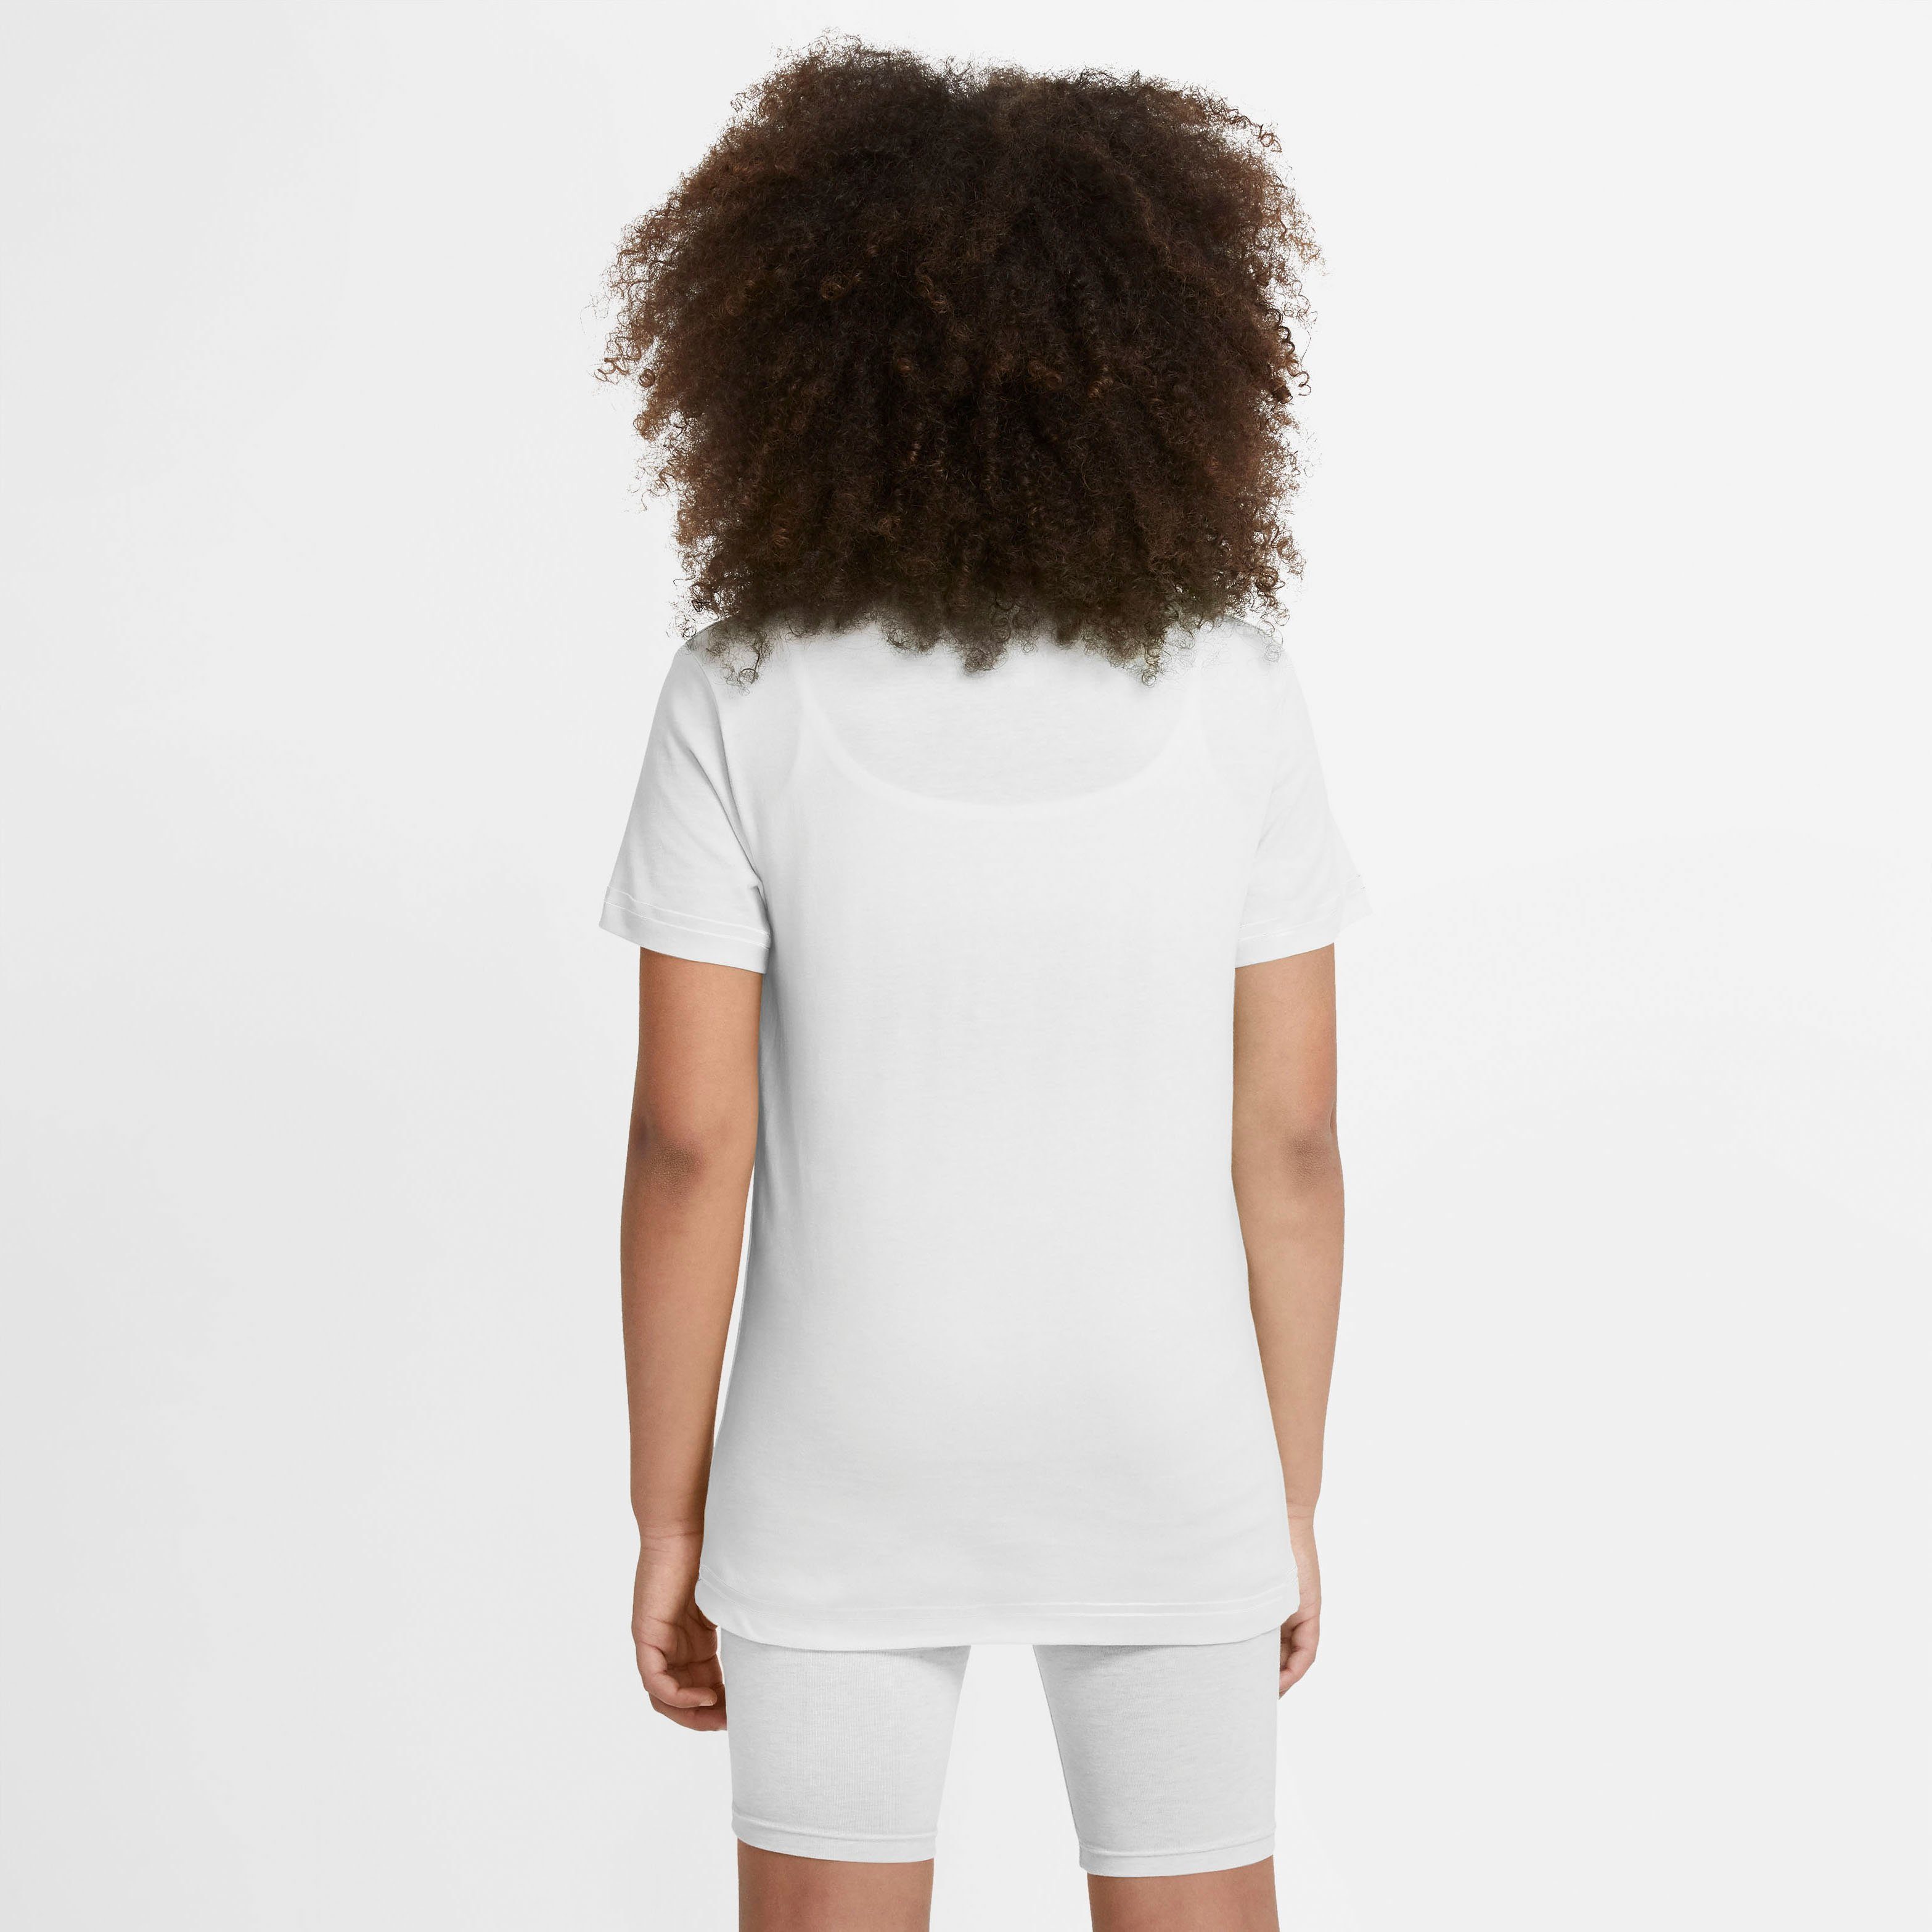 Sportswear Nike weiß Kids' T-Shirt T-Shirt (Girls) Big